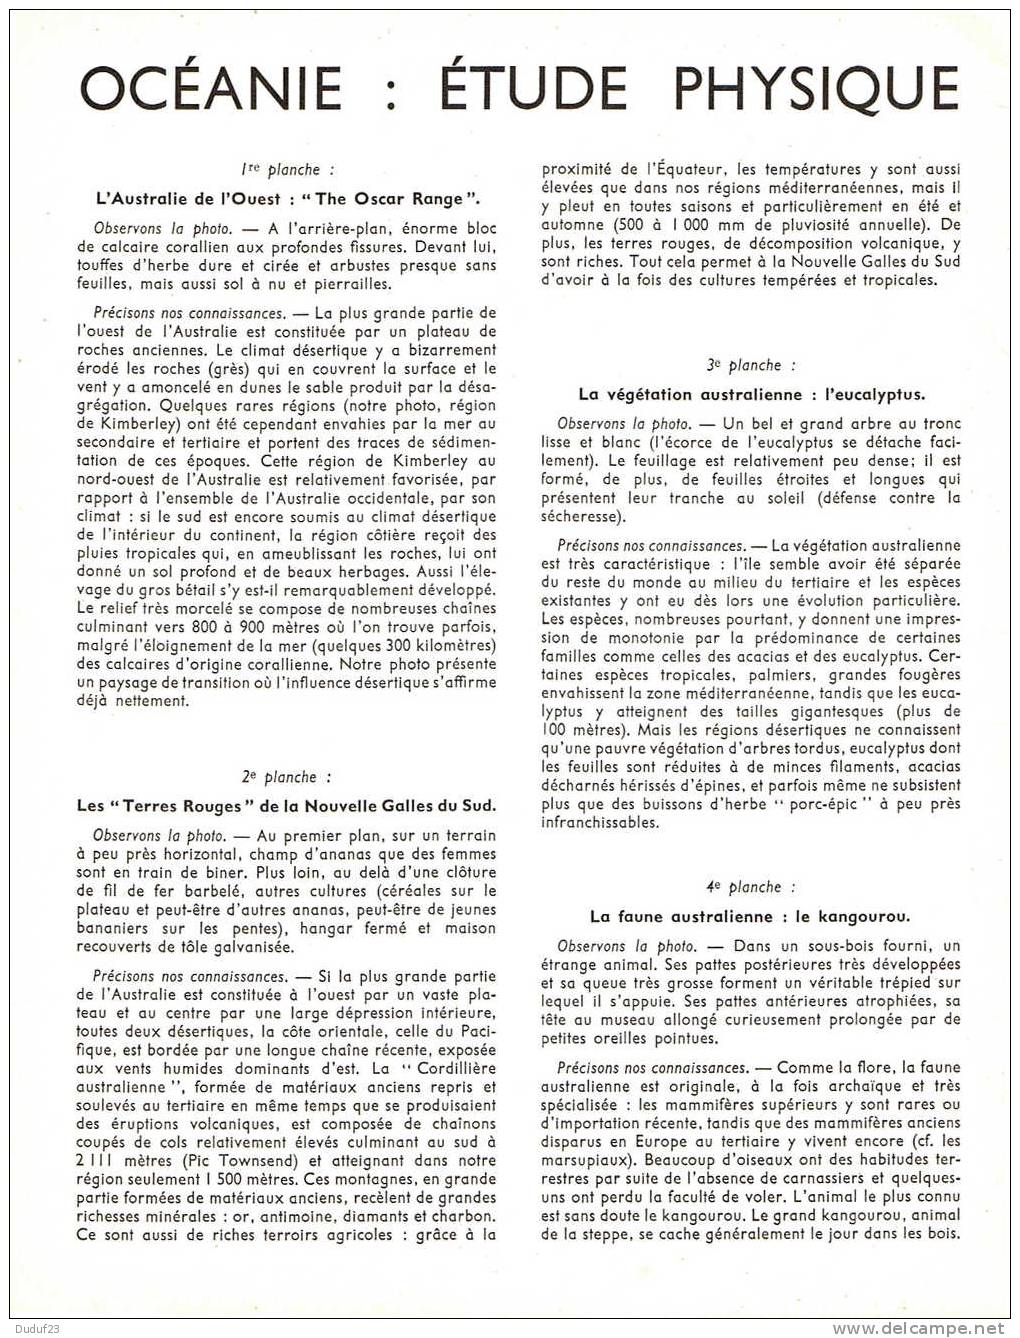 OCEANIE ETUDE PHYSIQUE - DOCUMENTATION PEDAGOGIQUE ROSSIGNOL MONTMORILLON 1956 - Fiches Didactiques